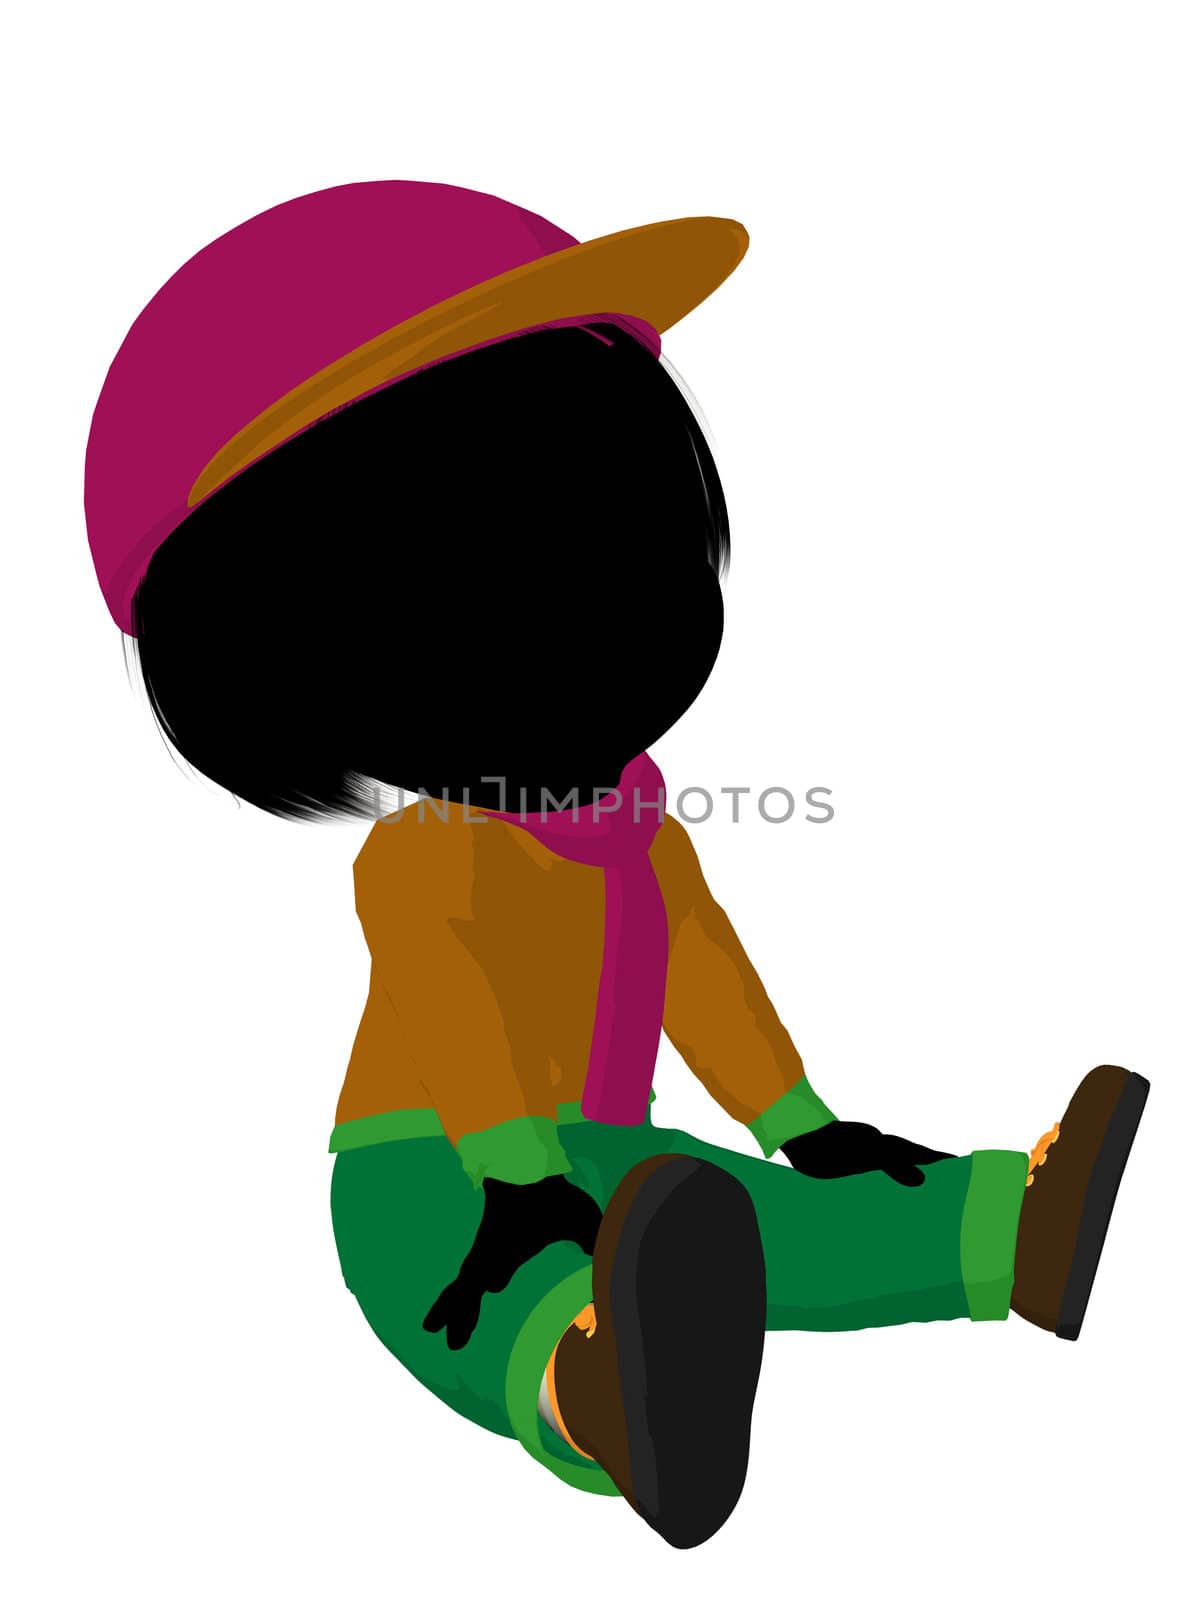 Little Outdoor Girl Illustration Silhouette by kathygold